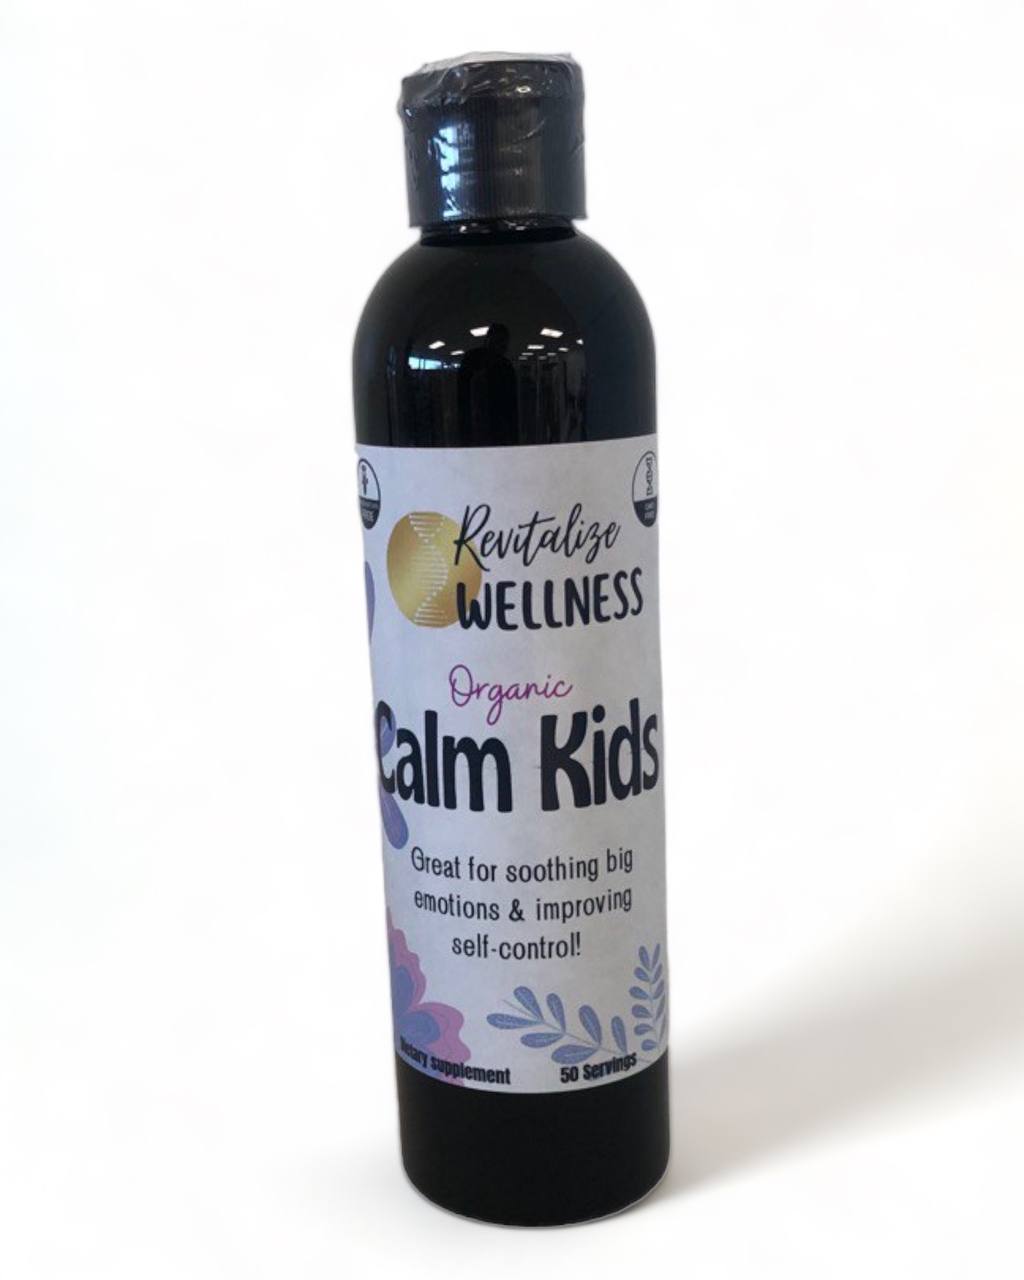 Calm Kids - 50 servings